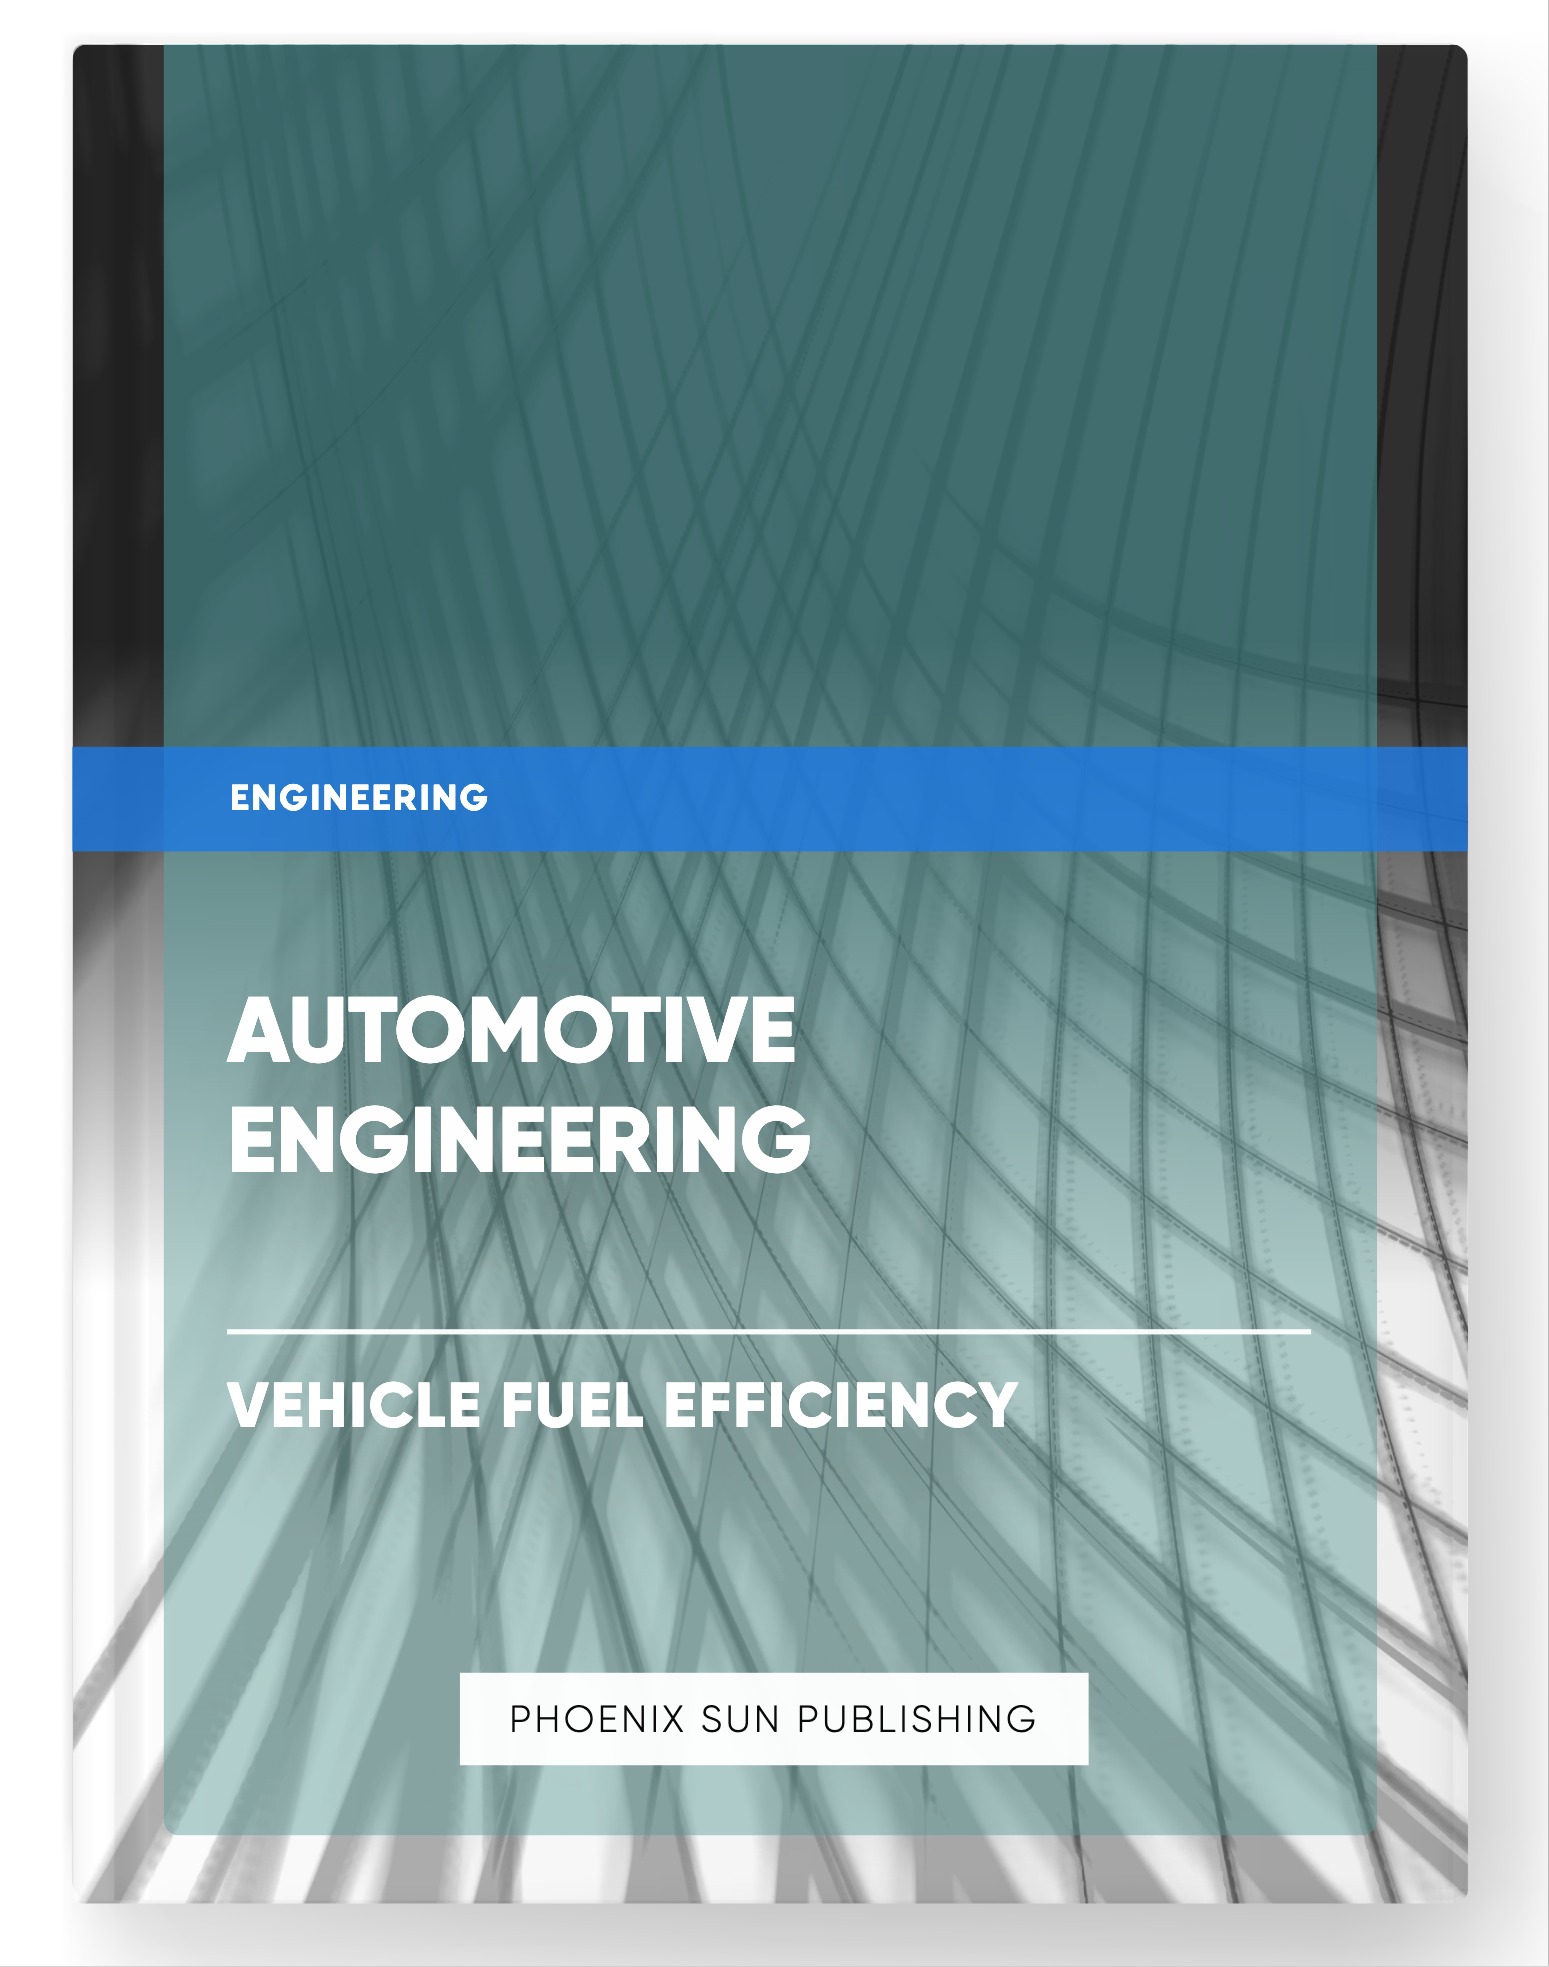 Automotive Engineering – Vehicle Fuel Efficiency